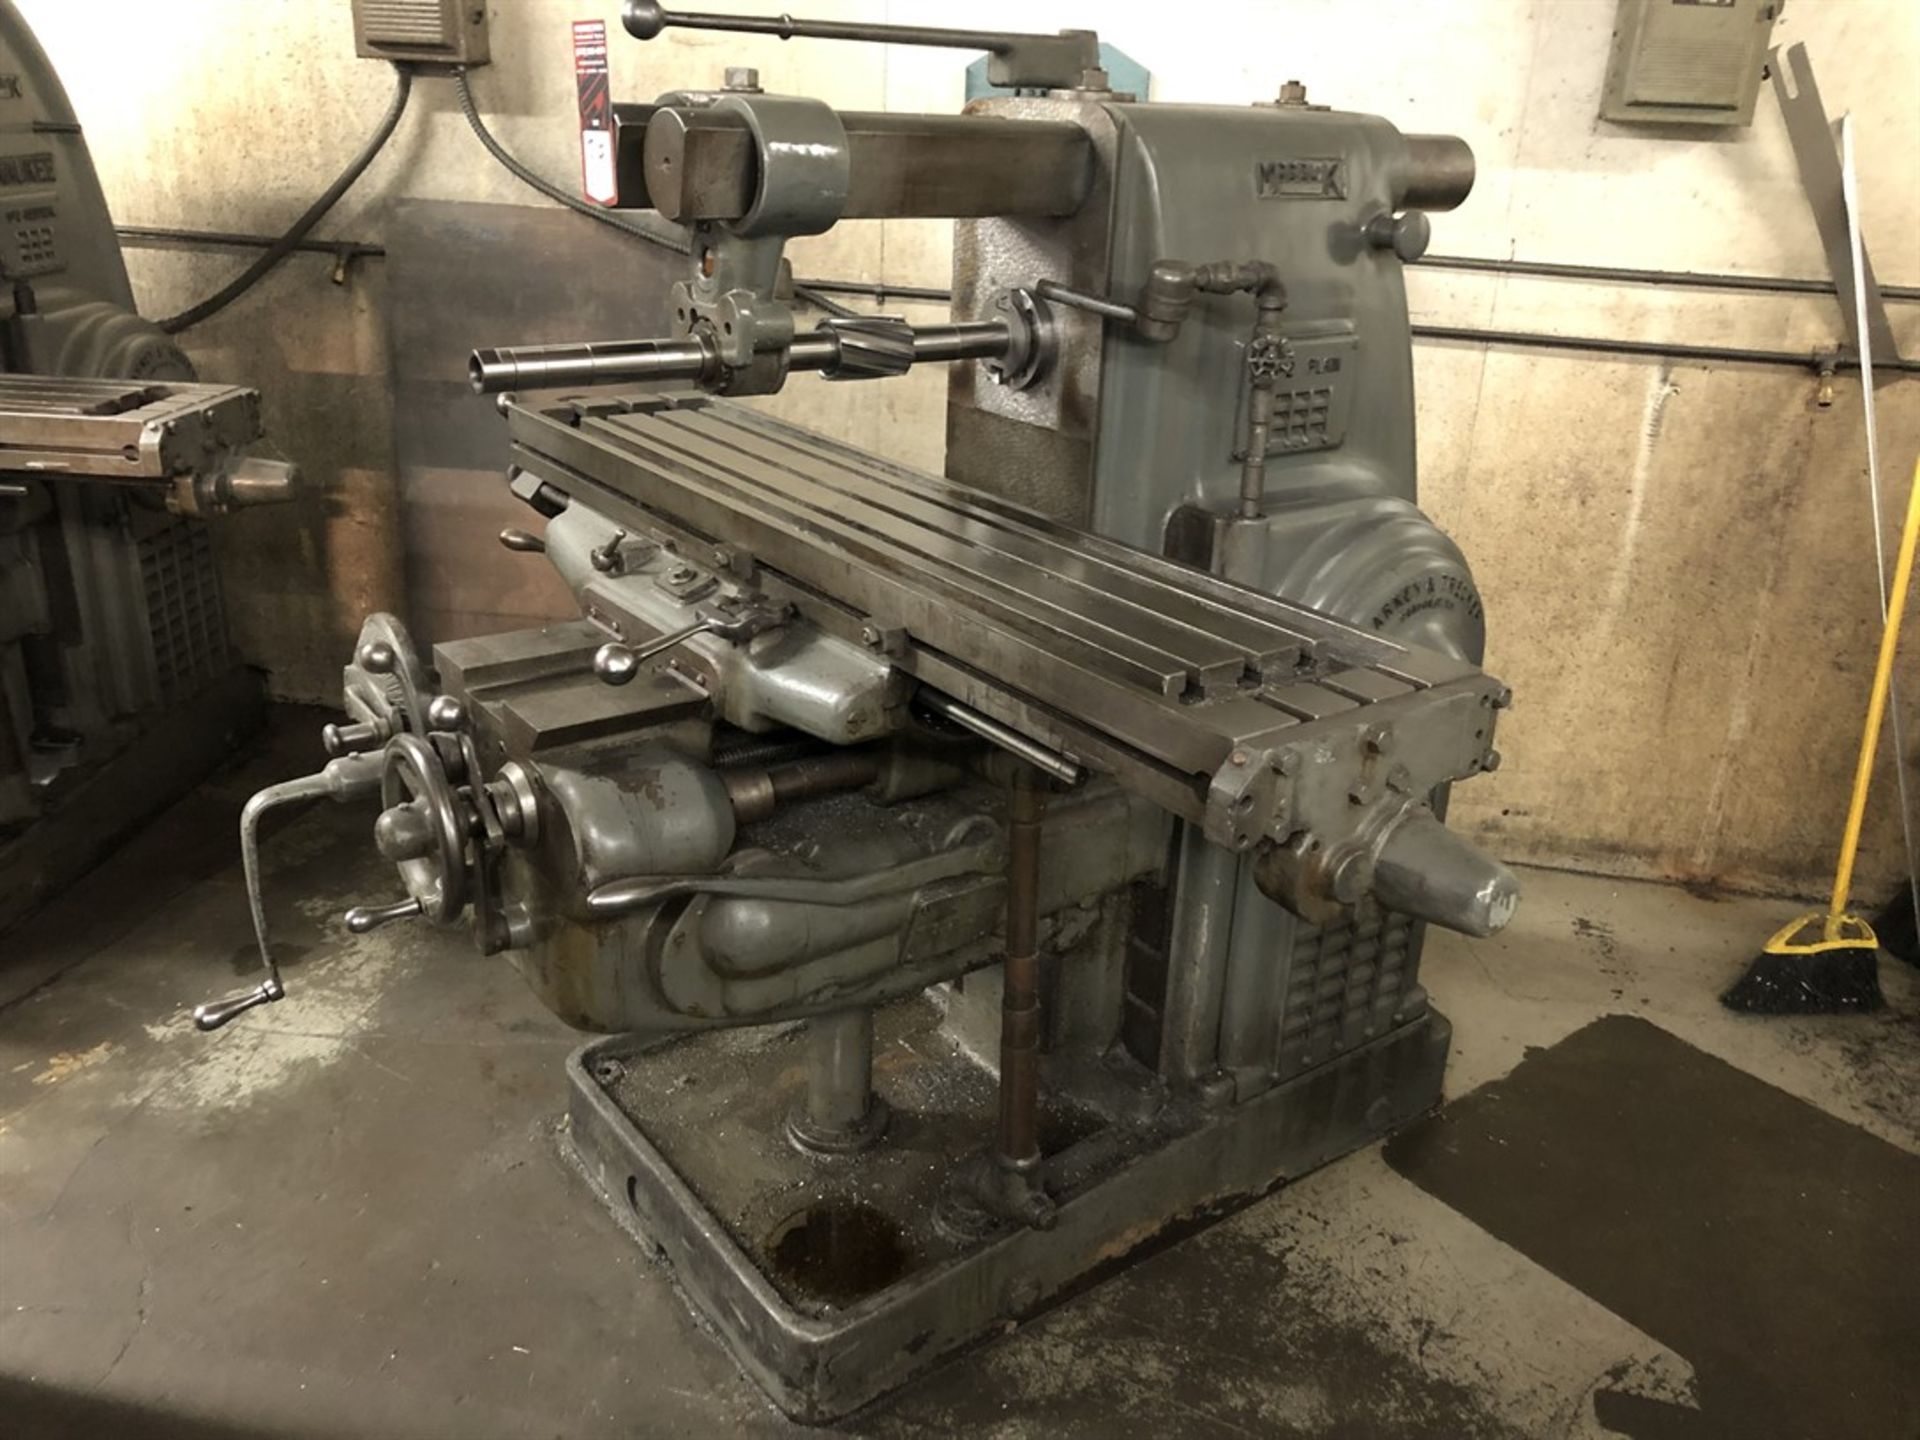 MILWAUKEE K Plain No. 2 Horizontal Milling Machine, s/n 5-4046, 12” x 56” Table, 15-1500 RPM